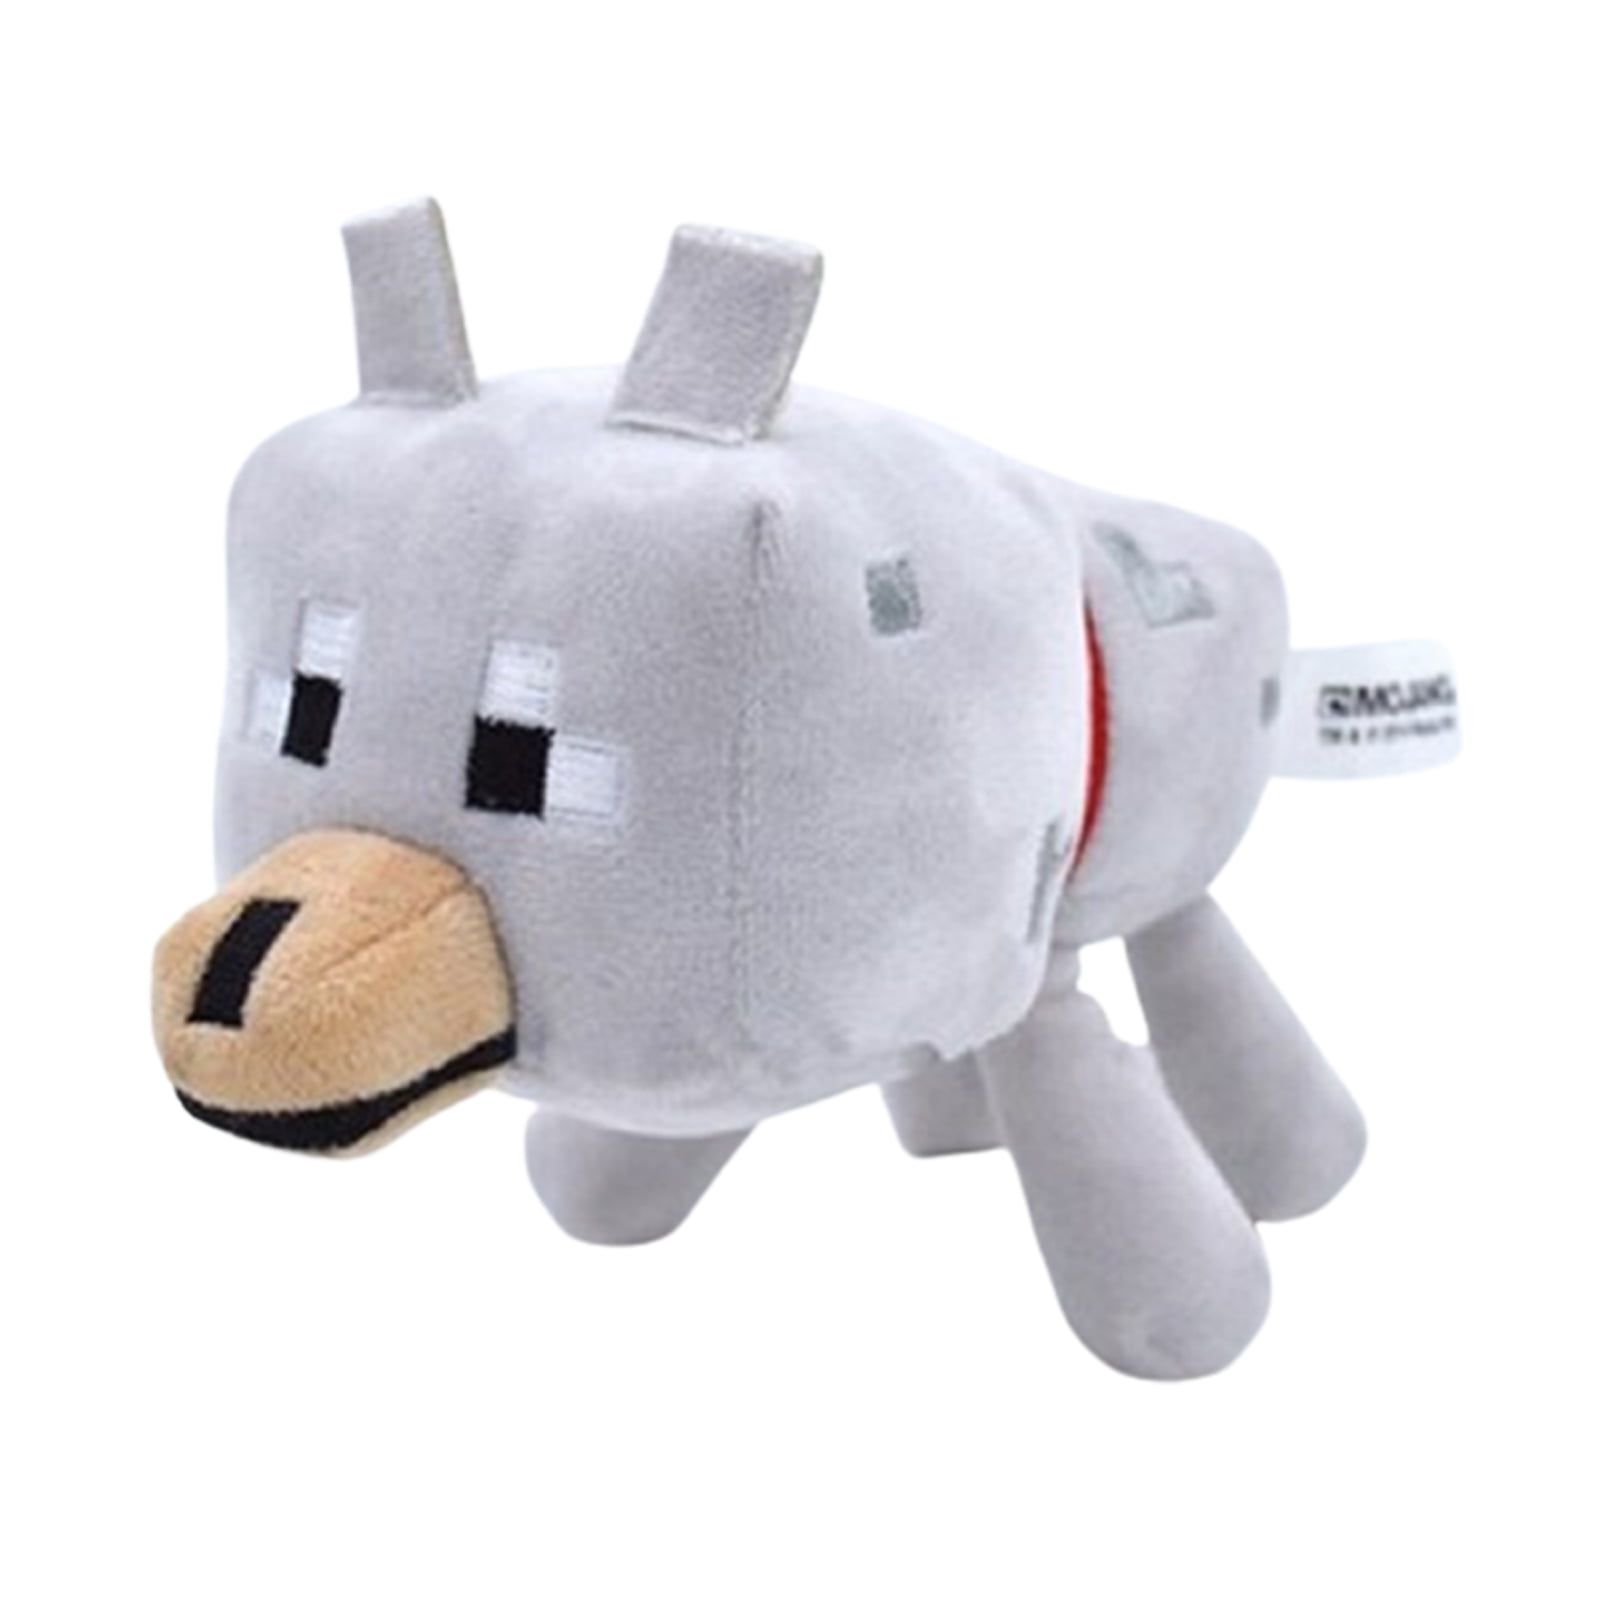 New Minecraft Plush Toy Creeper Stuffed Animal Soft Plushies Kids Xmas Gift 